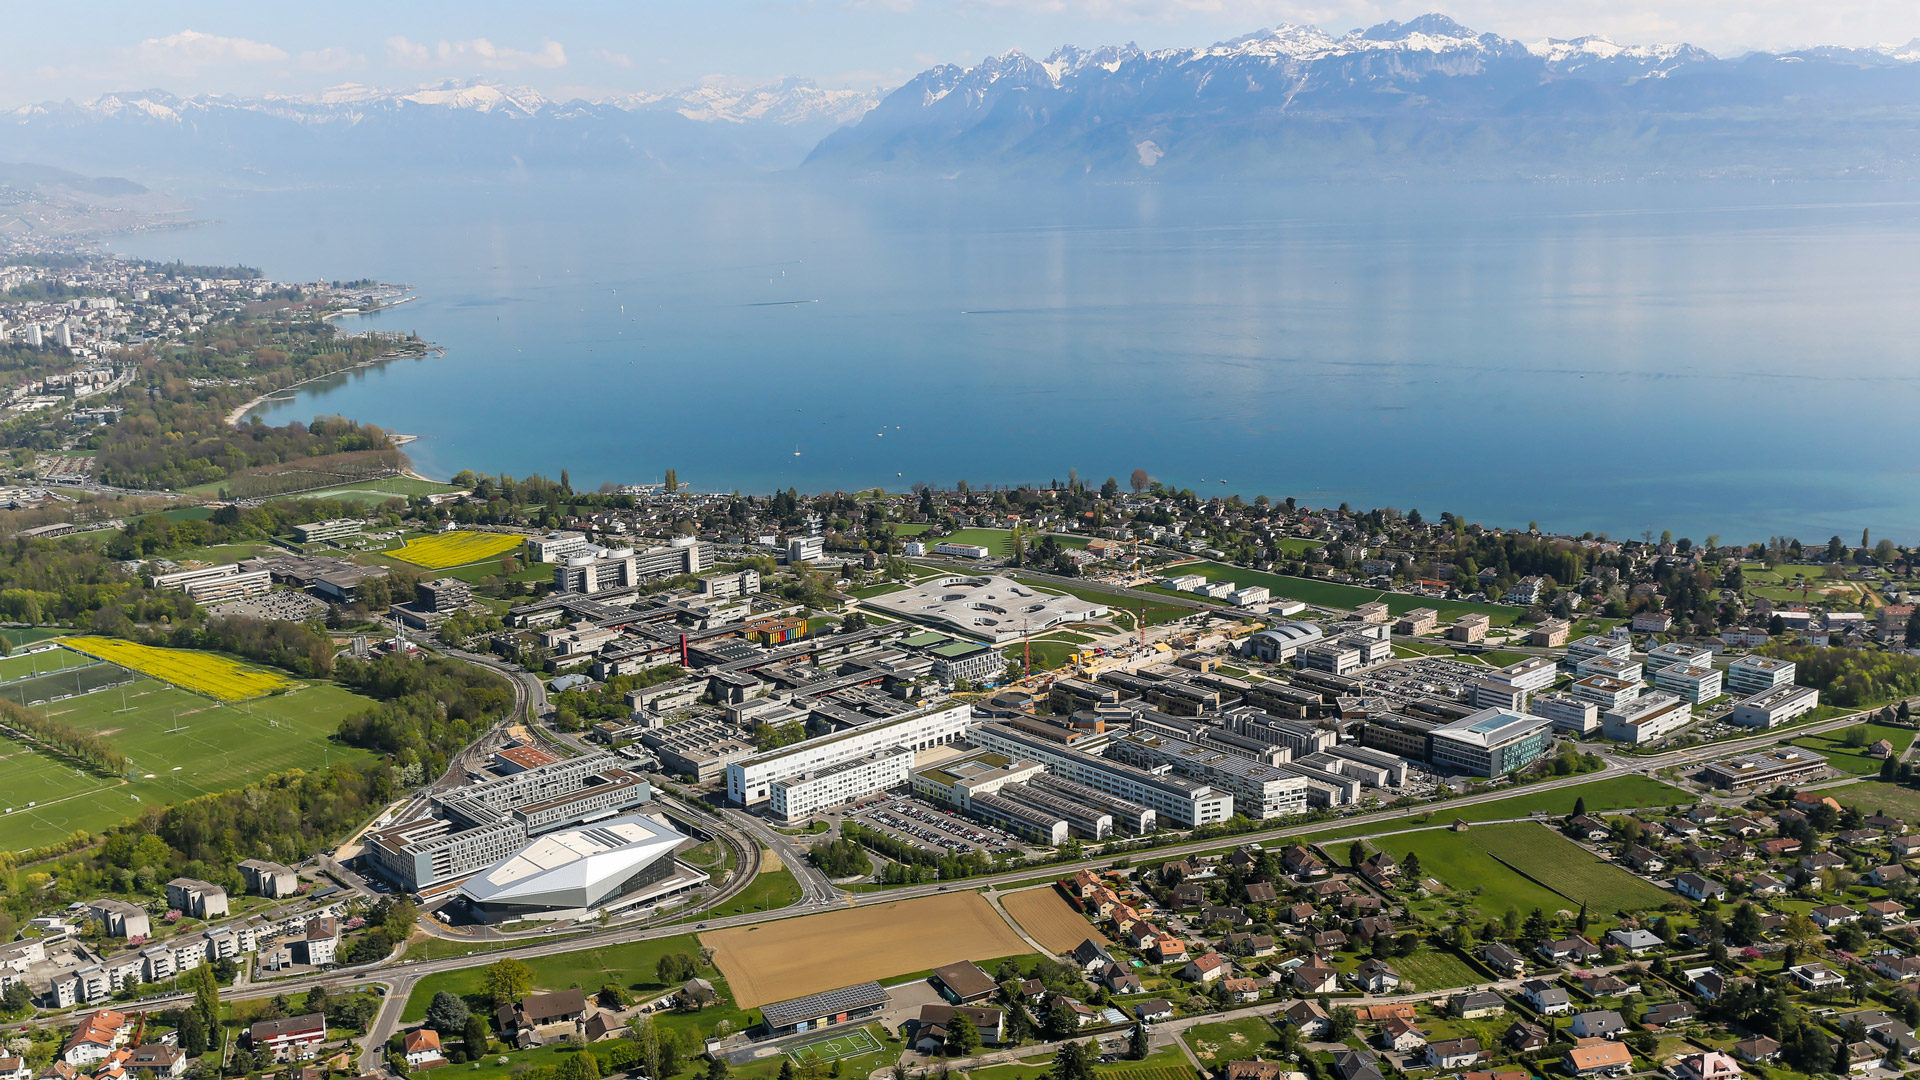 © Alain Herzog - Swisstech Convention Center EPFL, Lausanne